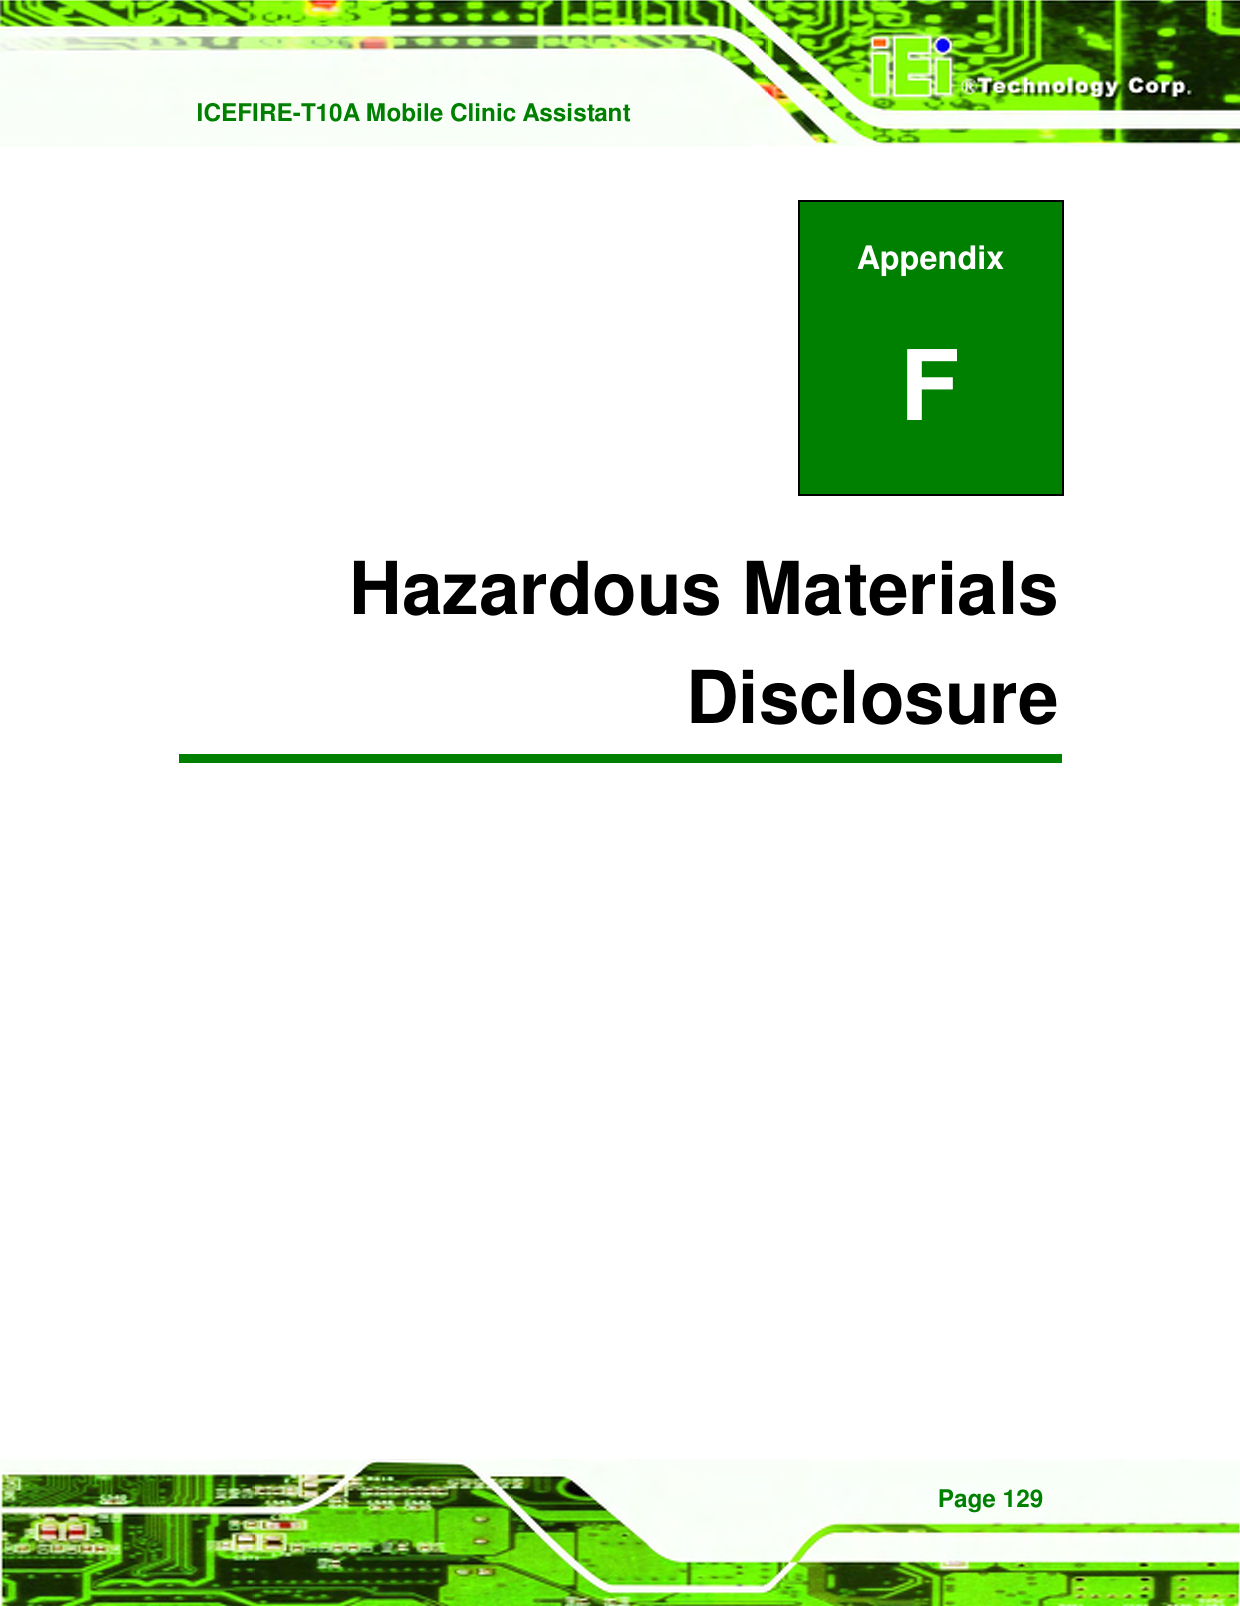   ICEFIRE-T10A Mobile Clinic Assistant Page 129 Appendix F F Hazardous Materials Disclosure 